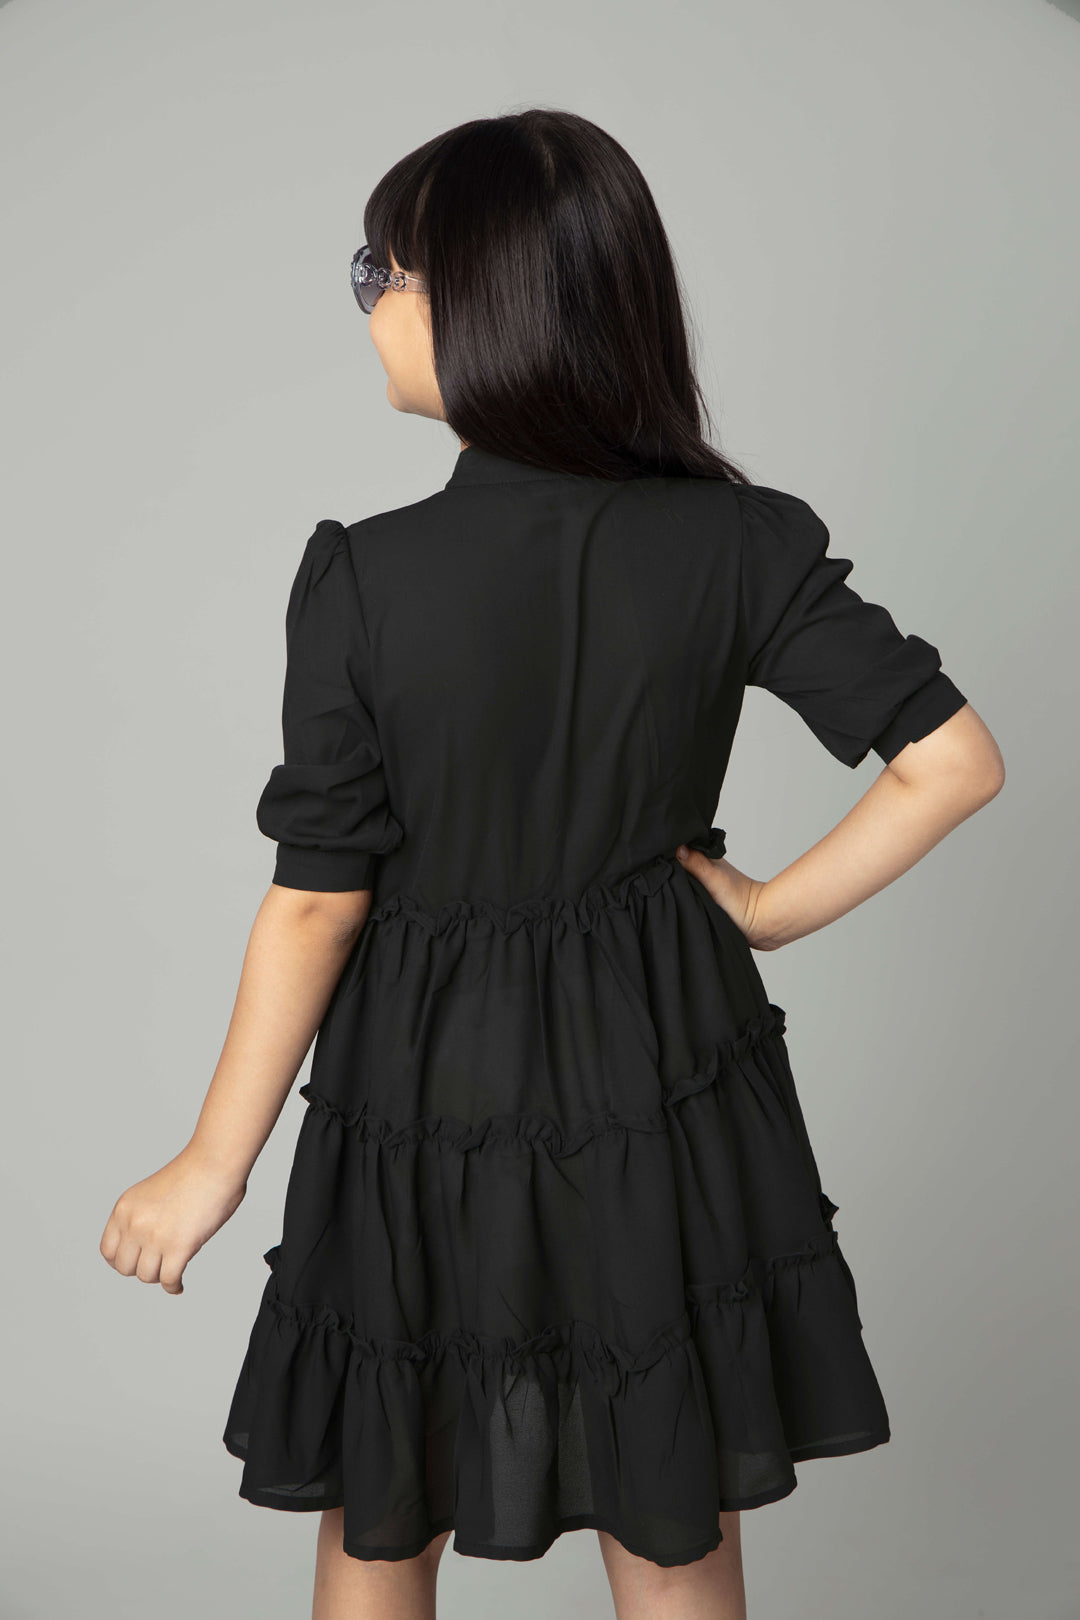 Black Puff Sleeve Ruffle Shirt Dress For Girls